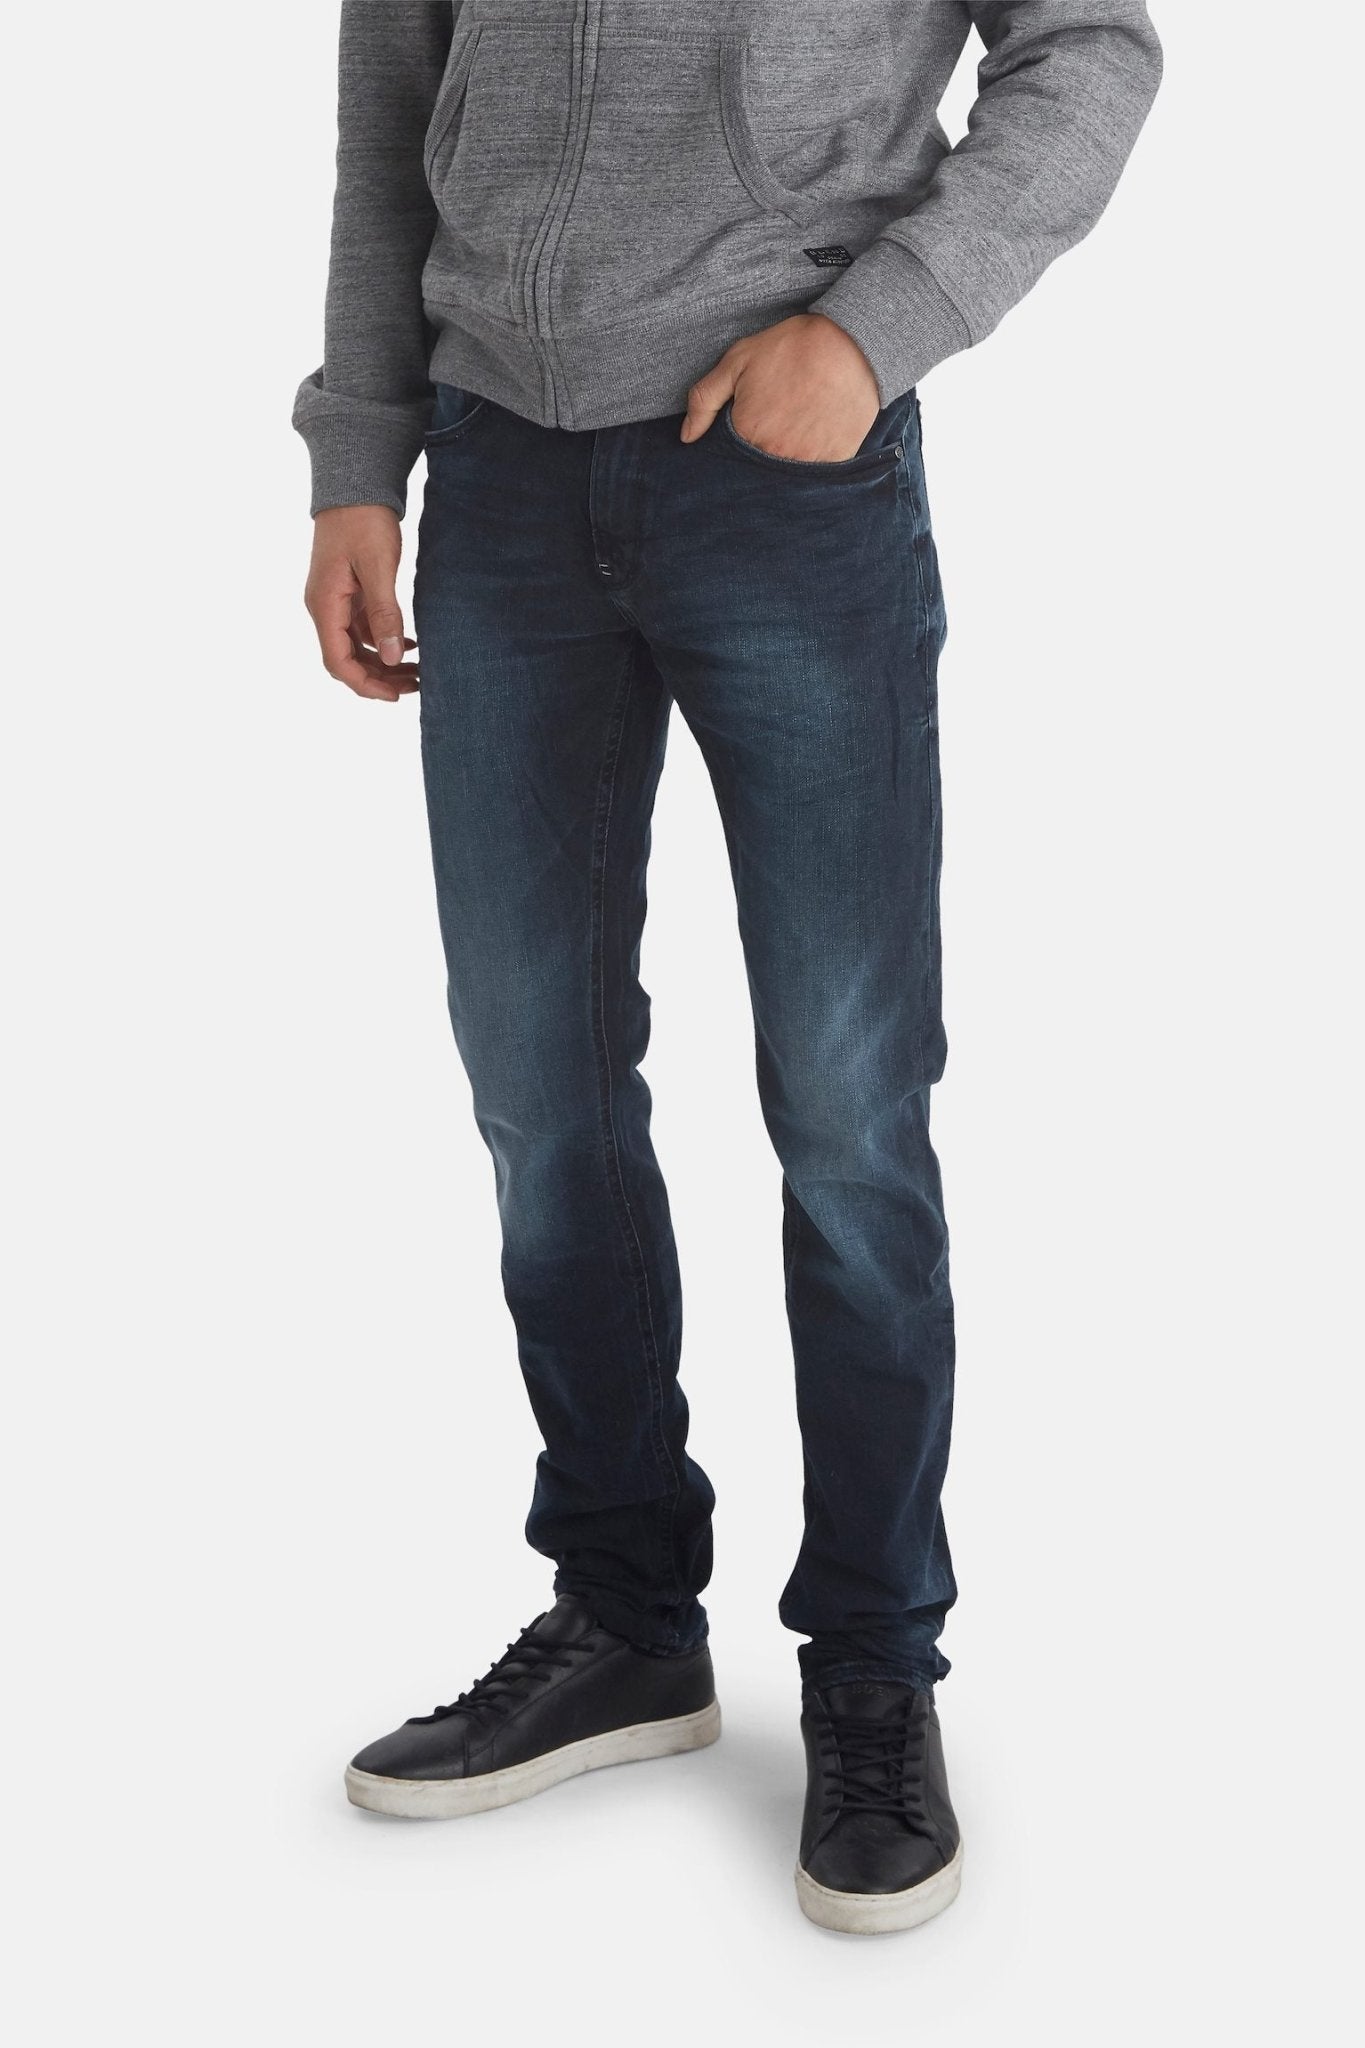 attitude | Jeans | Attitude Denim Jeans Mens W38xl34 Blue 5pocket Straight  Leg Cotton Blend | Poshmark